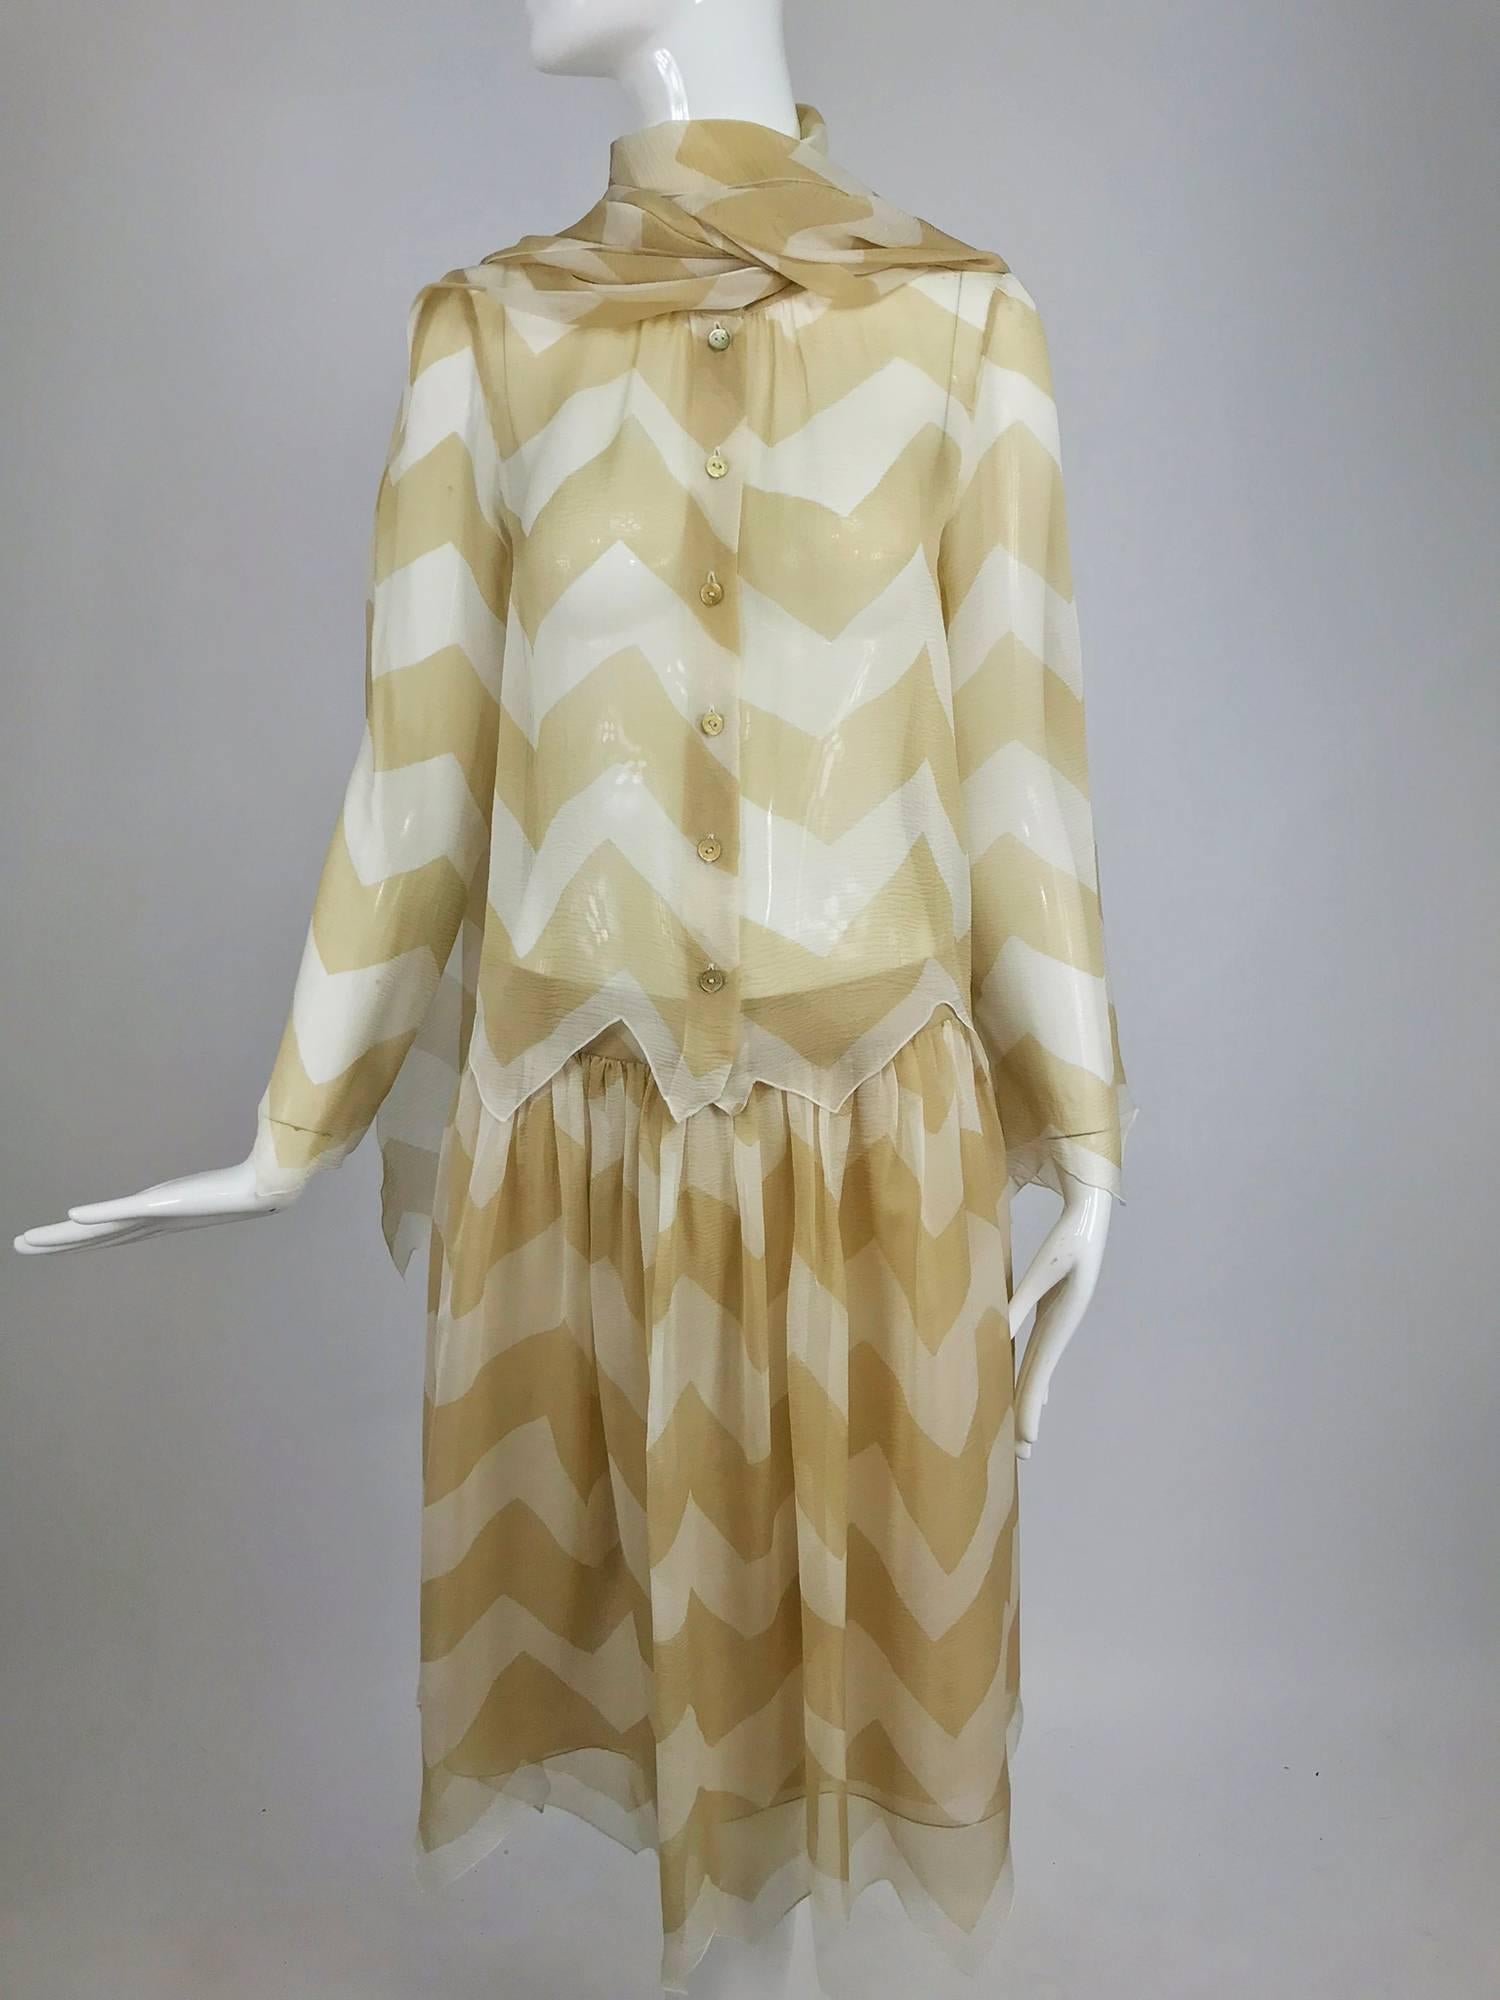 Chanel tan and cream zig zag silk chiffon blouse and skirt 2000A 8